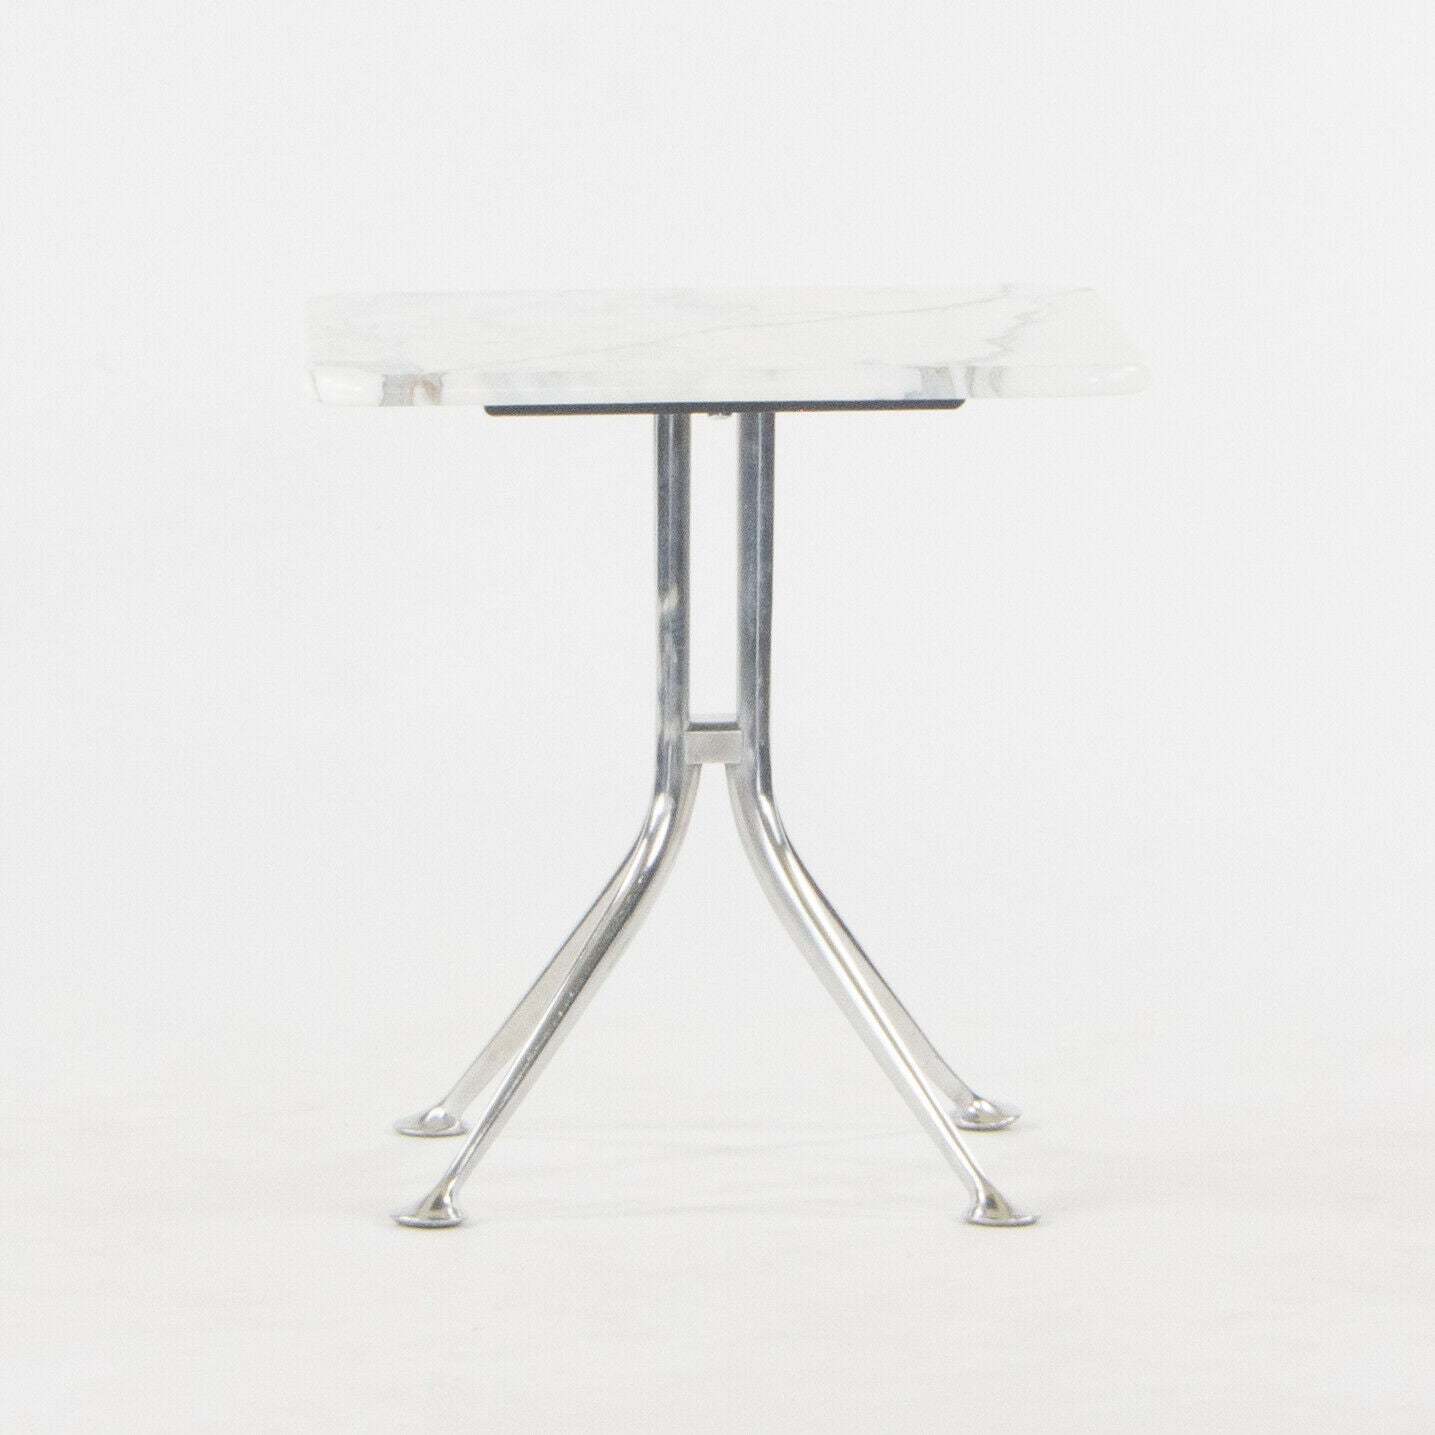 SOLD 1967 Alexander Girard 66352 Marble Side Table for Herman Miller Eames La Fonda